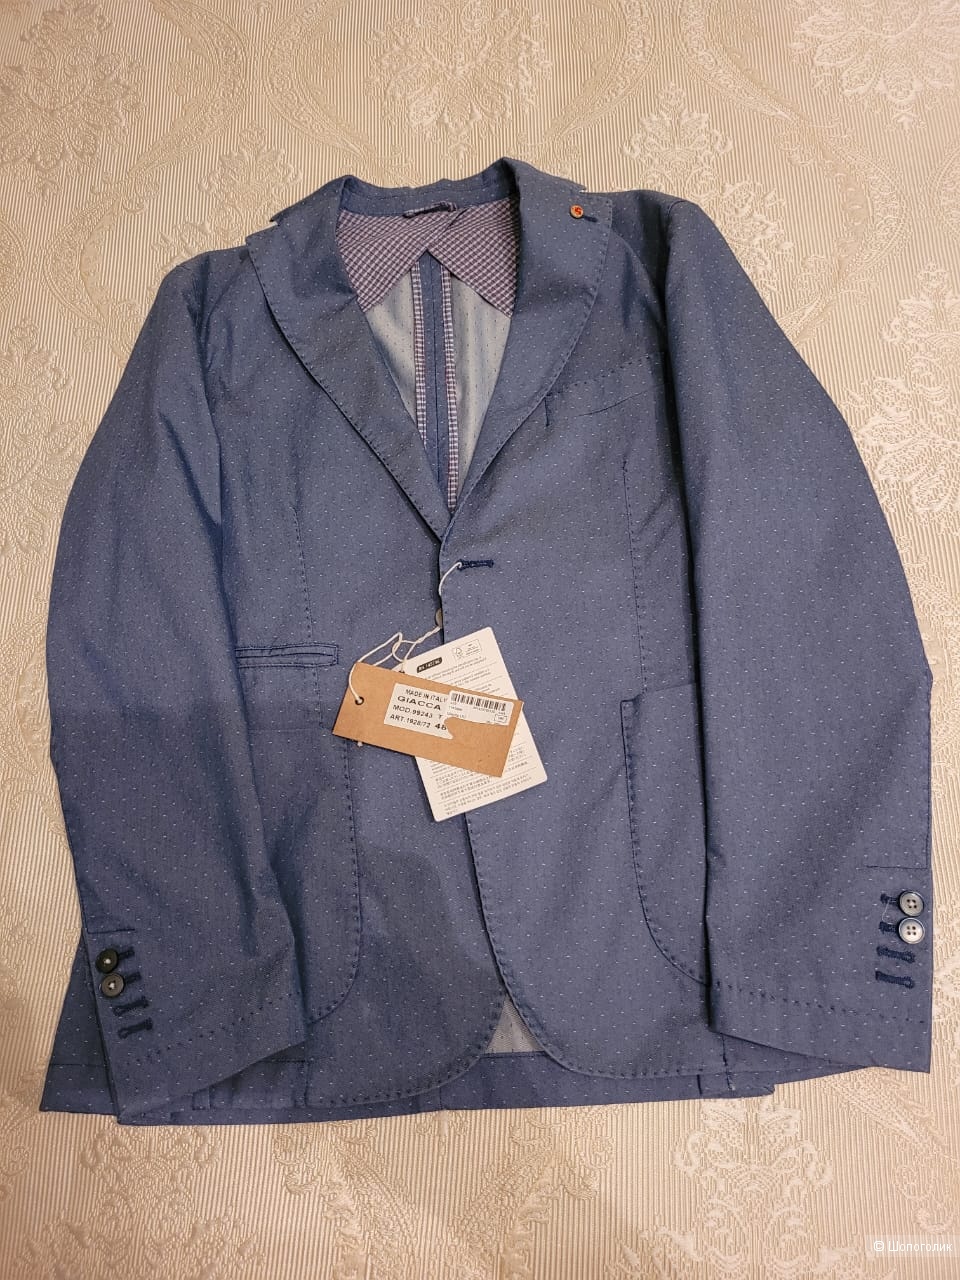 Мужской пиджак Jerry Key, 48-50 размер.